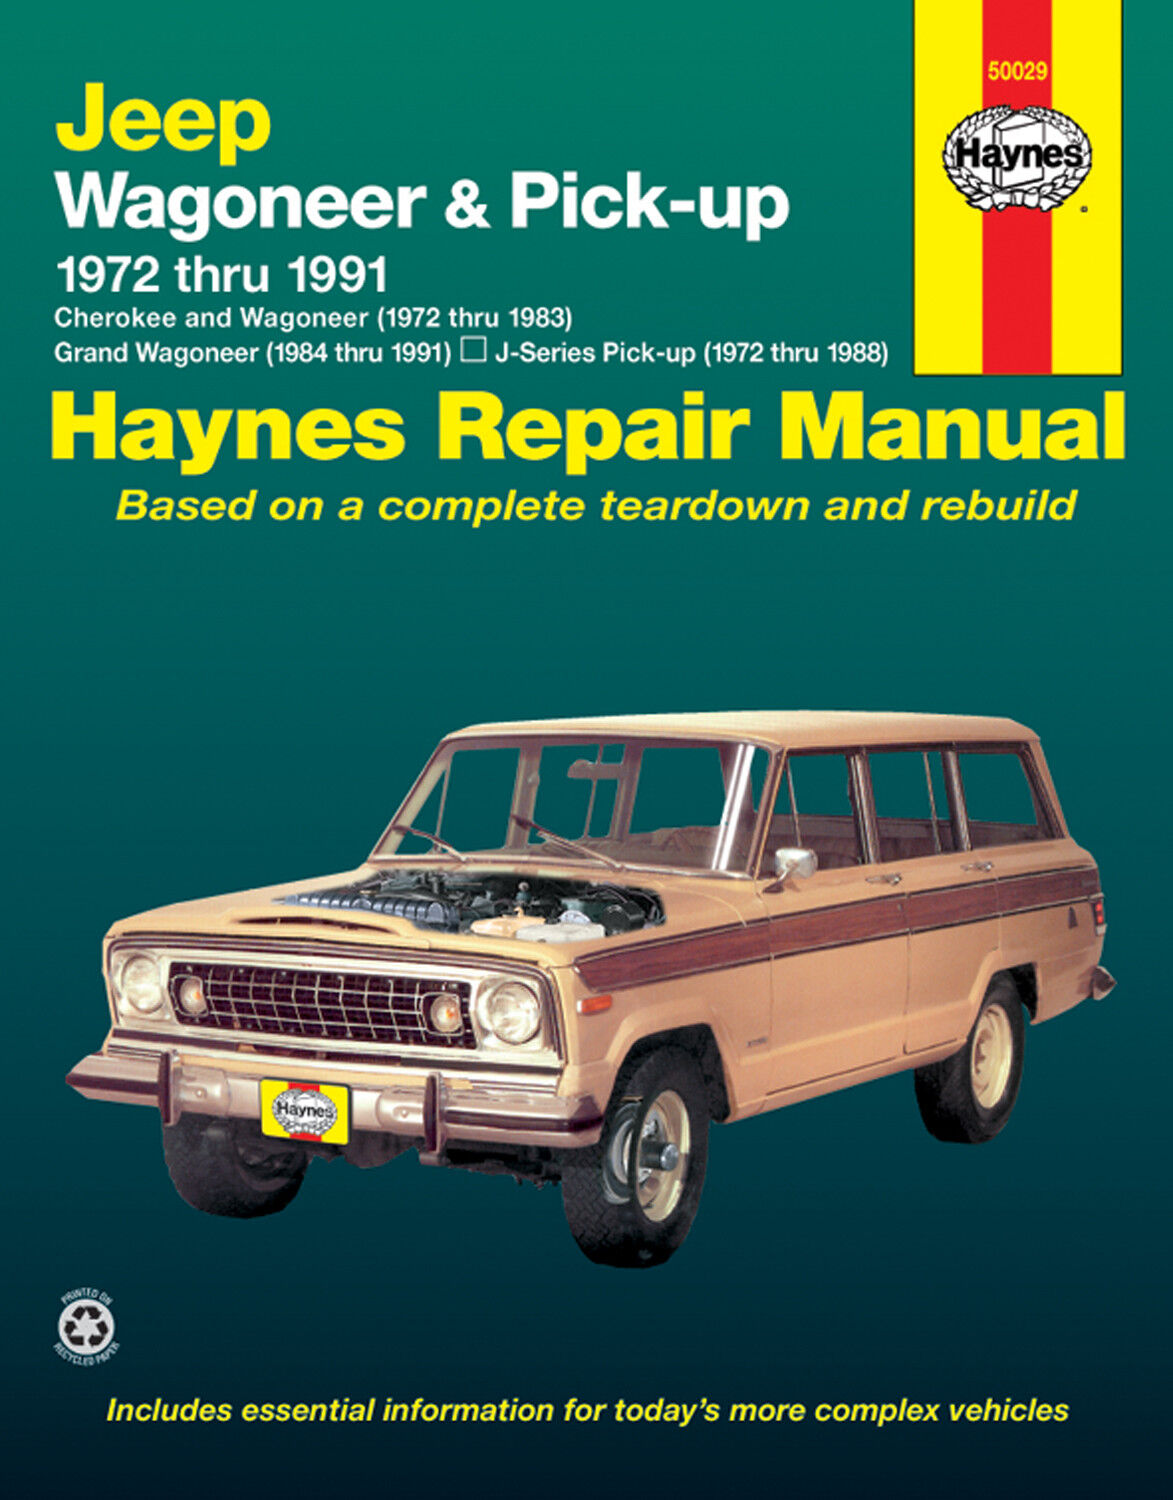 Haynes Repair Manual 50029 Jeep Wagoneer & Pick-up Service Book for 1972-1991